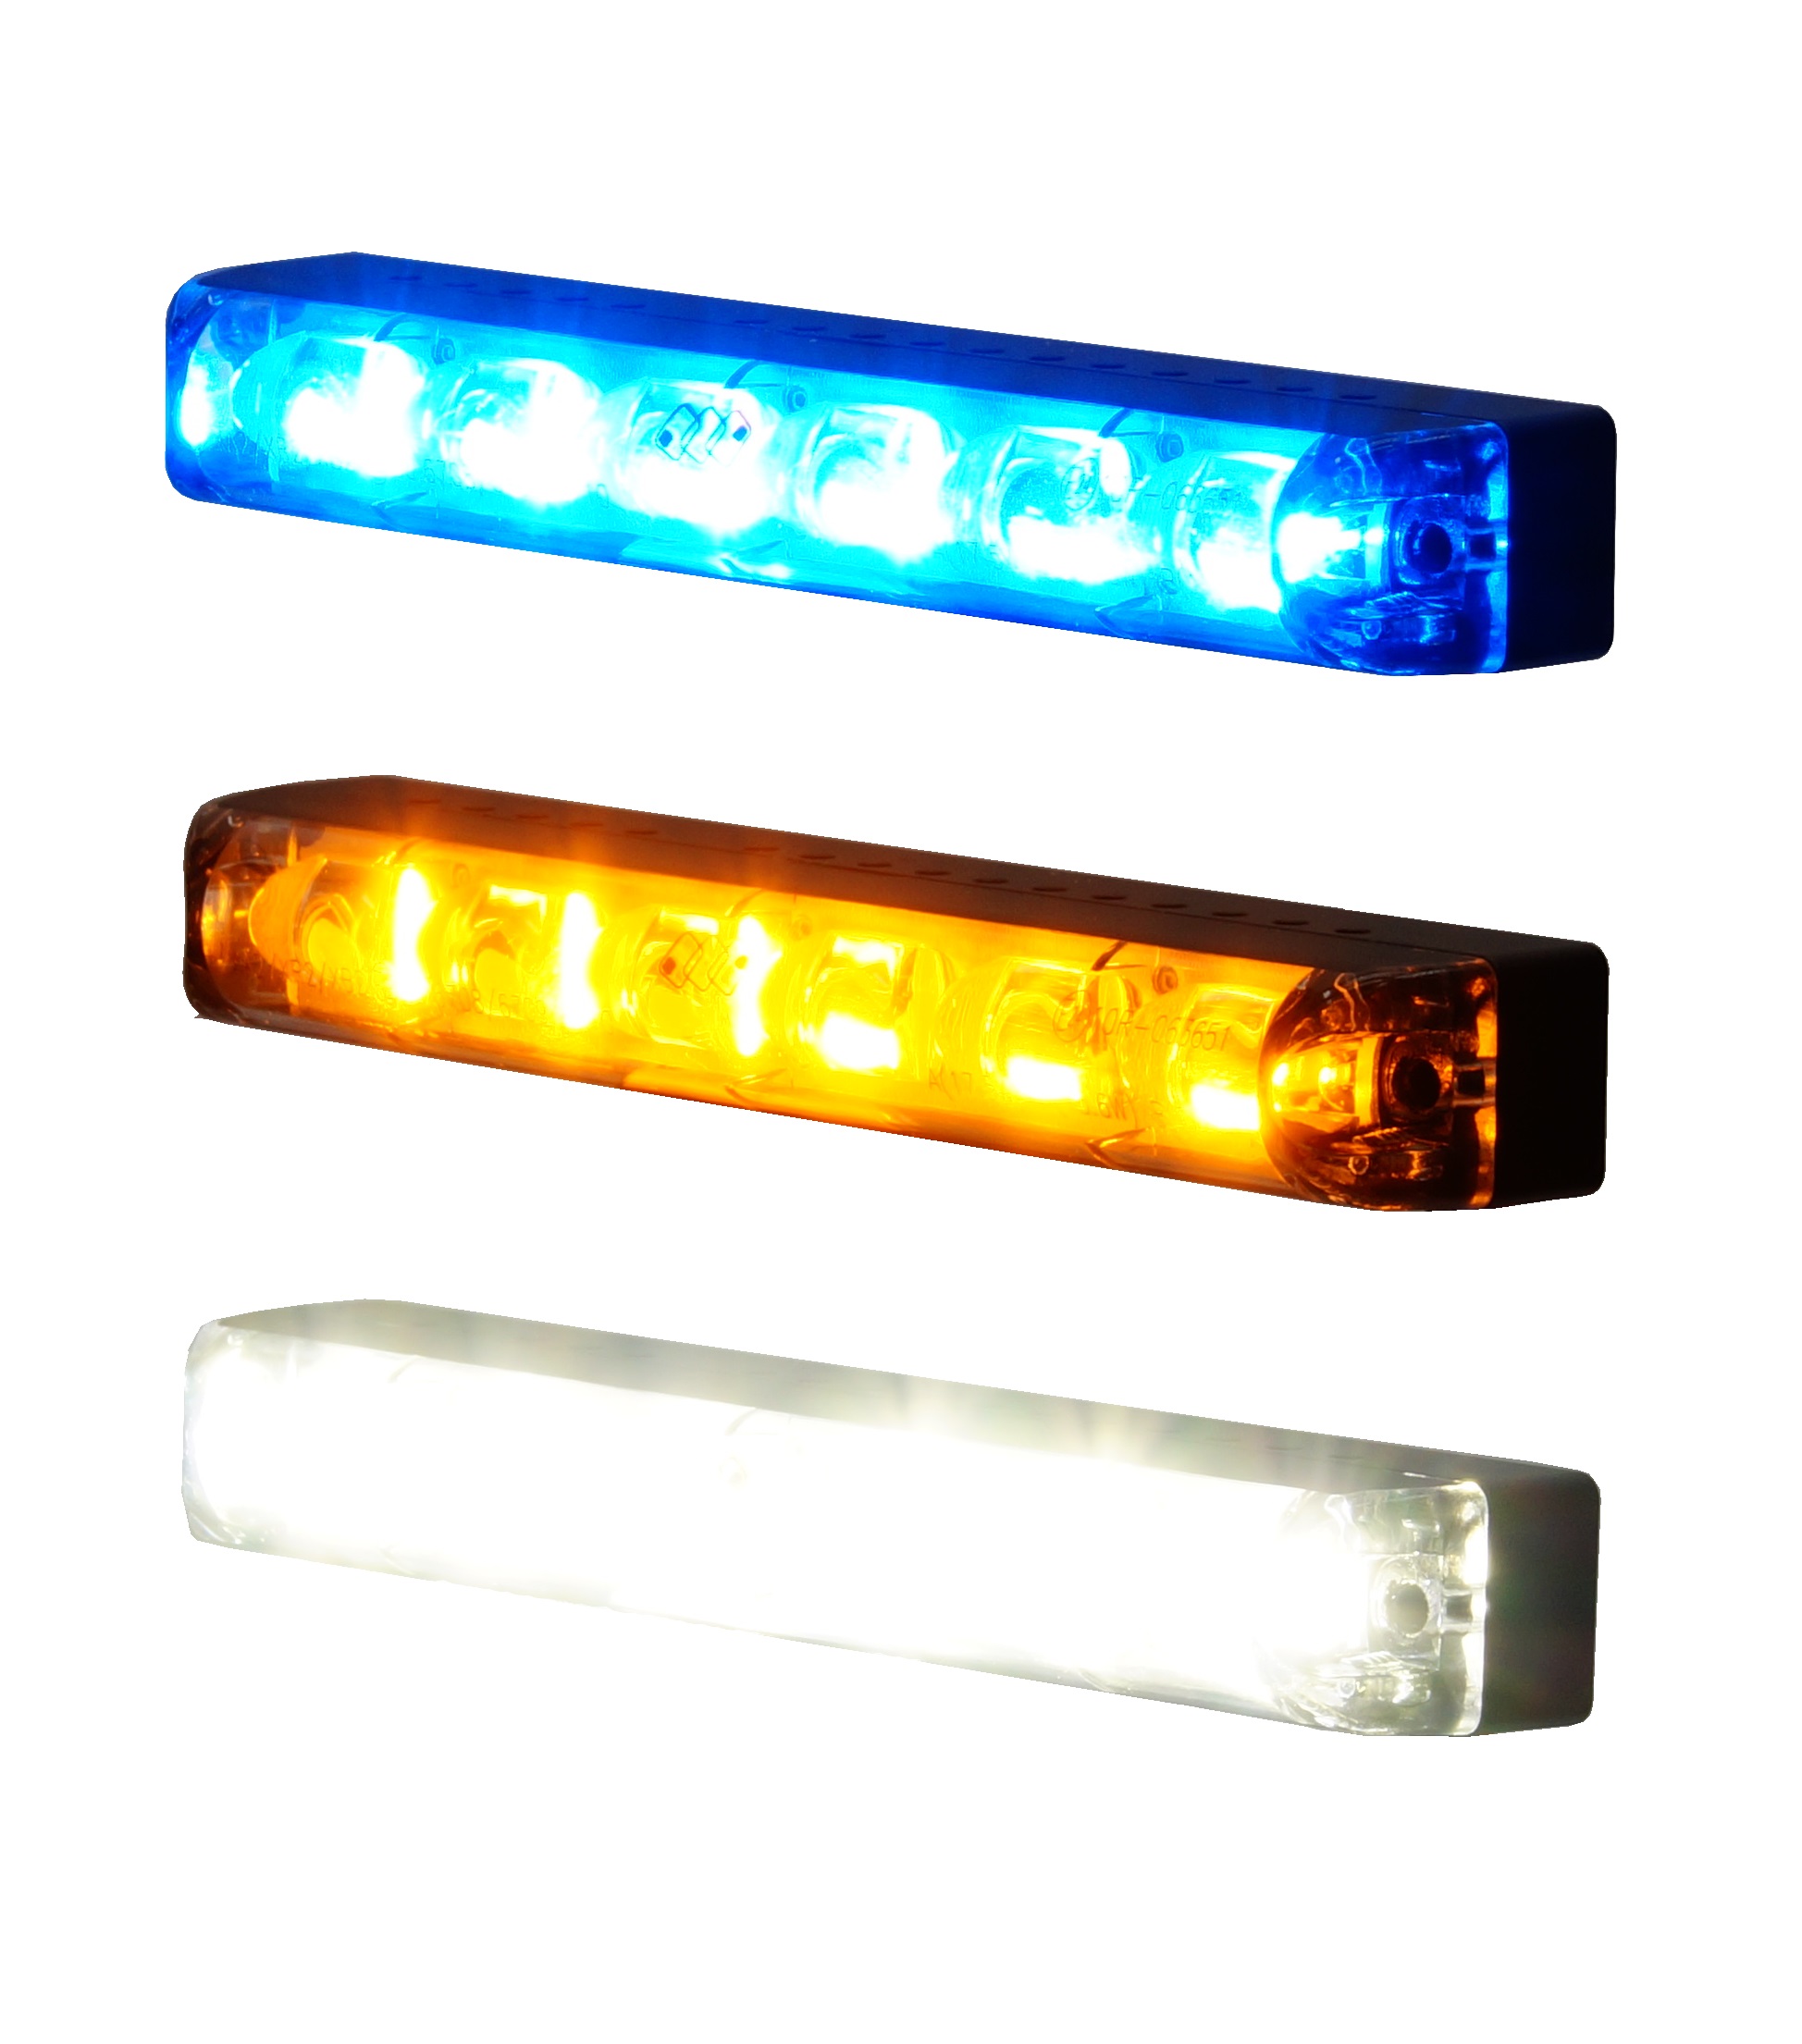 LED Frontblitzer dual color gelb/blau 12-24V, ECE R65 und R10